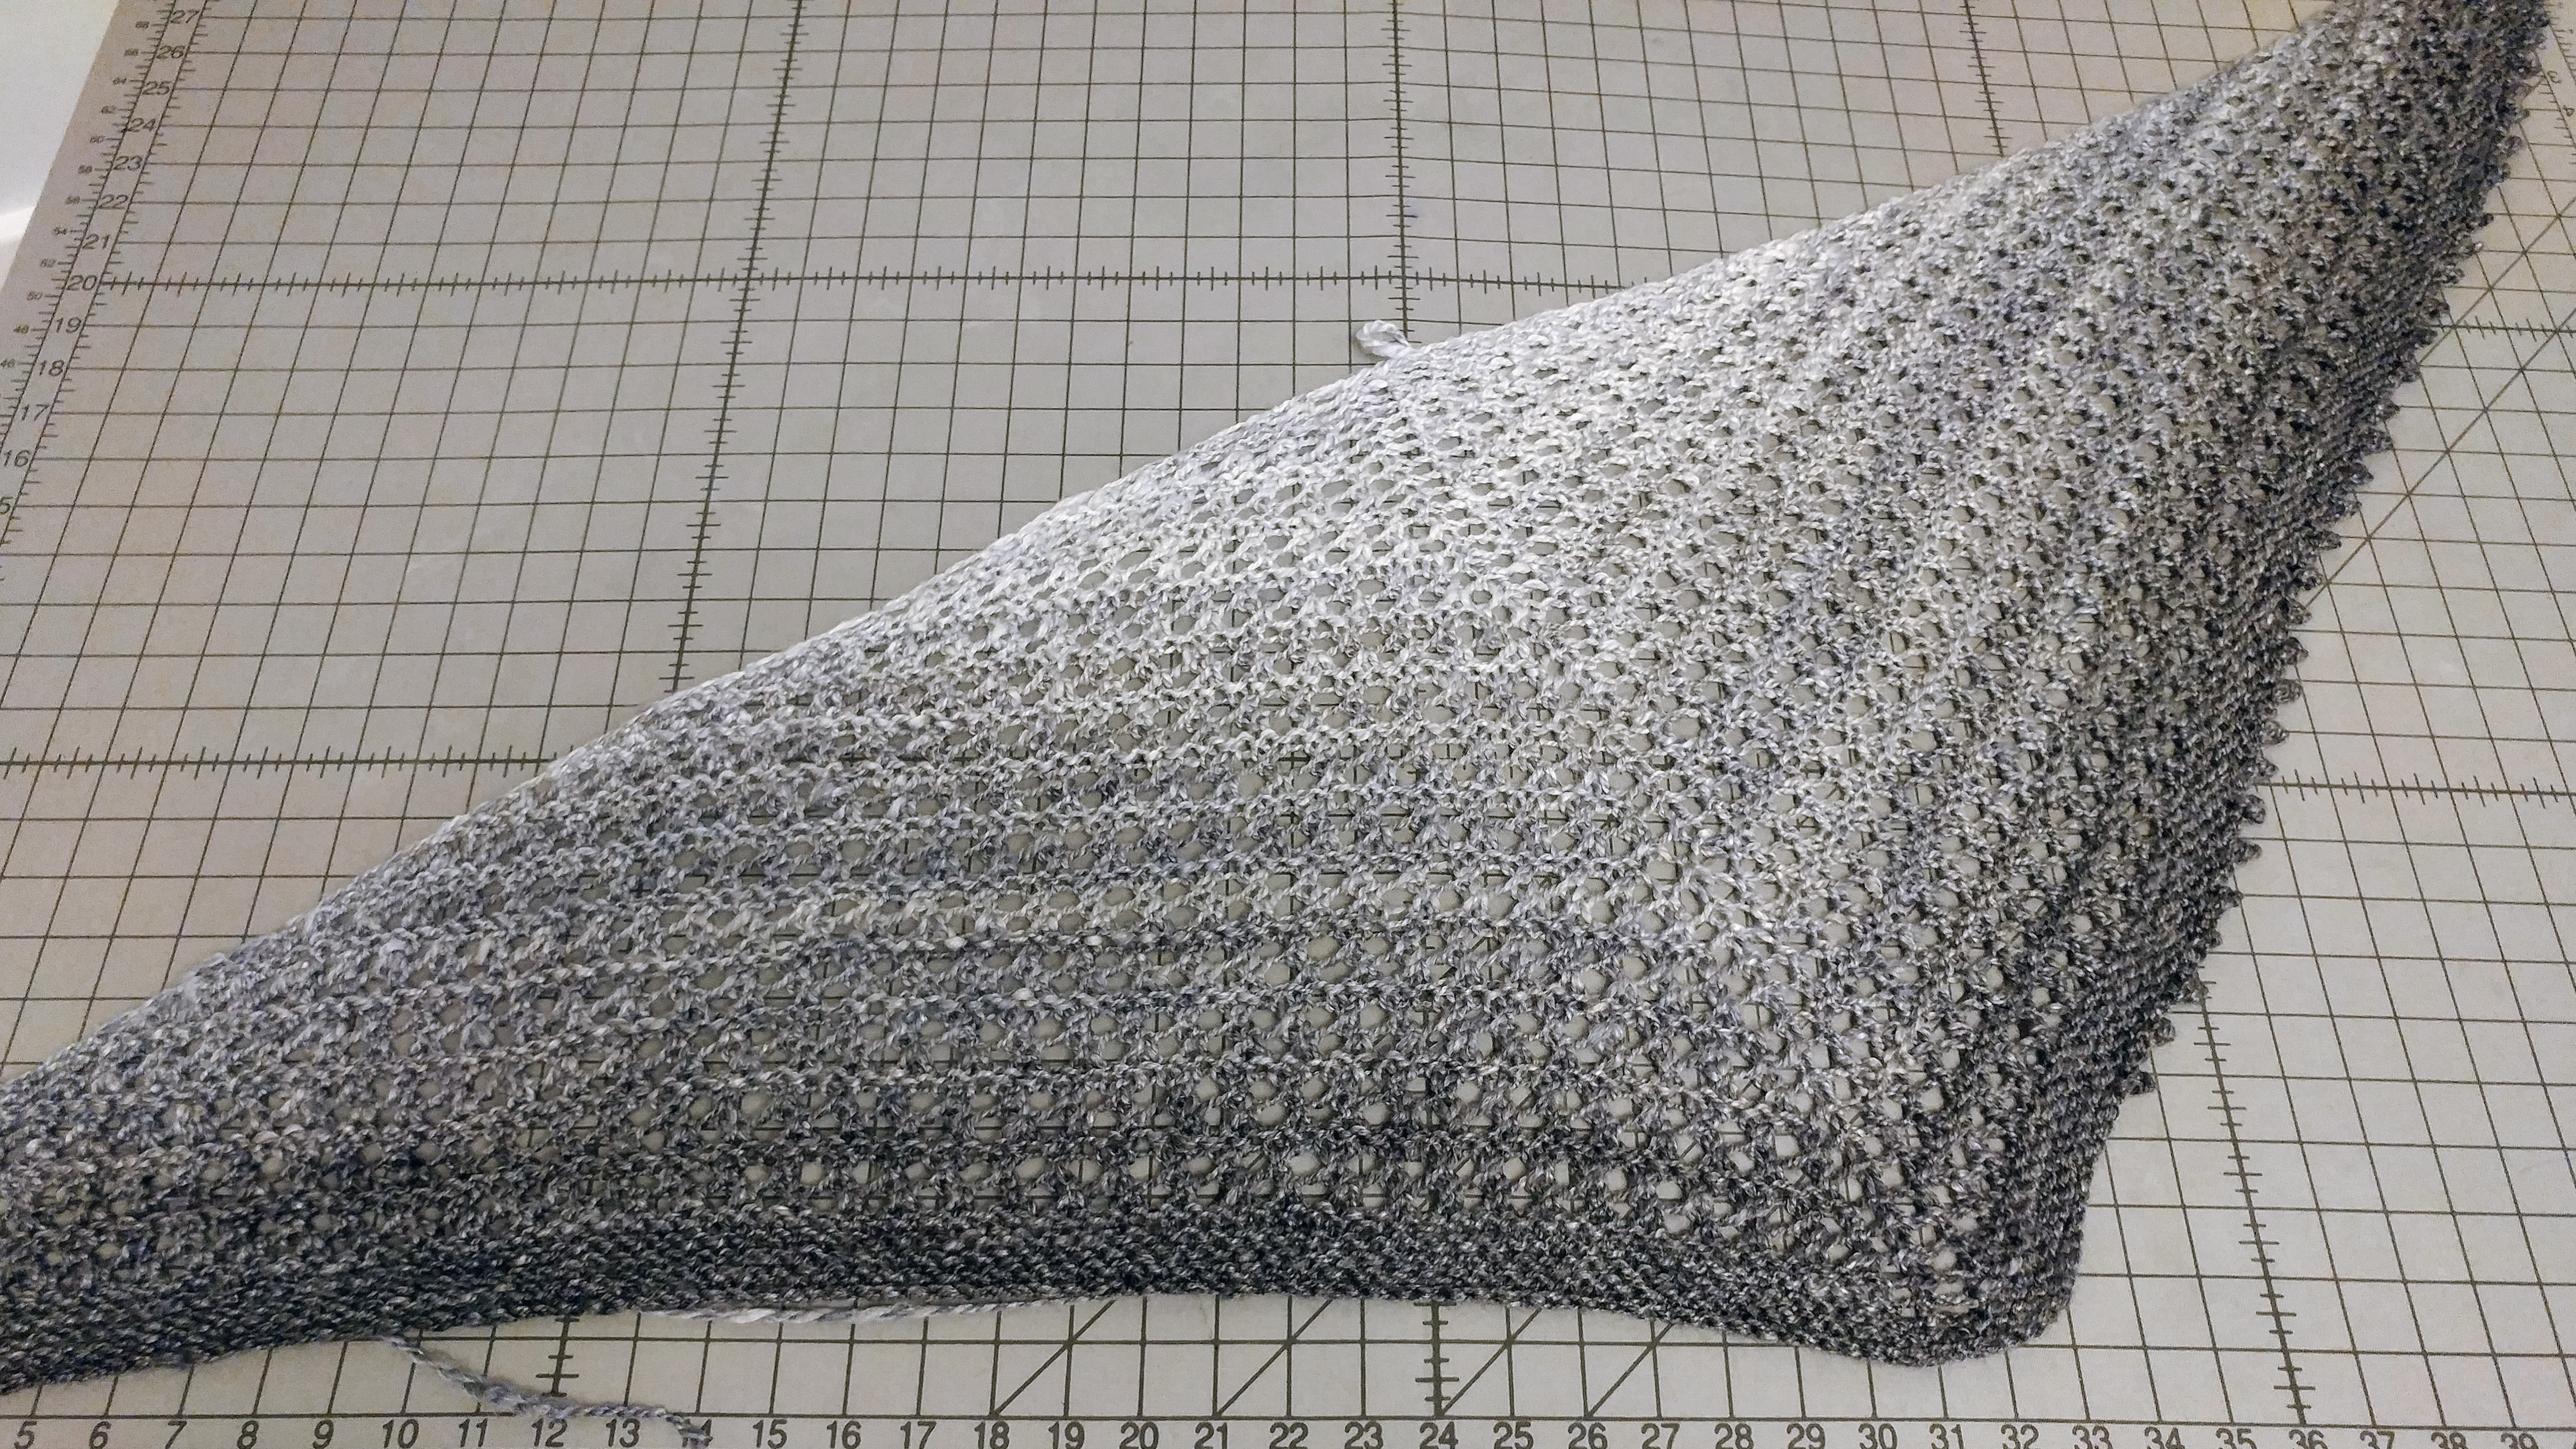 Knitted Ombre Shawl from Handspun Yarn â€“ https://www.kimwerker.com/blog